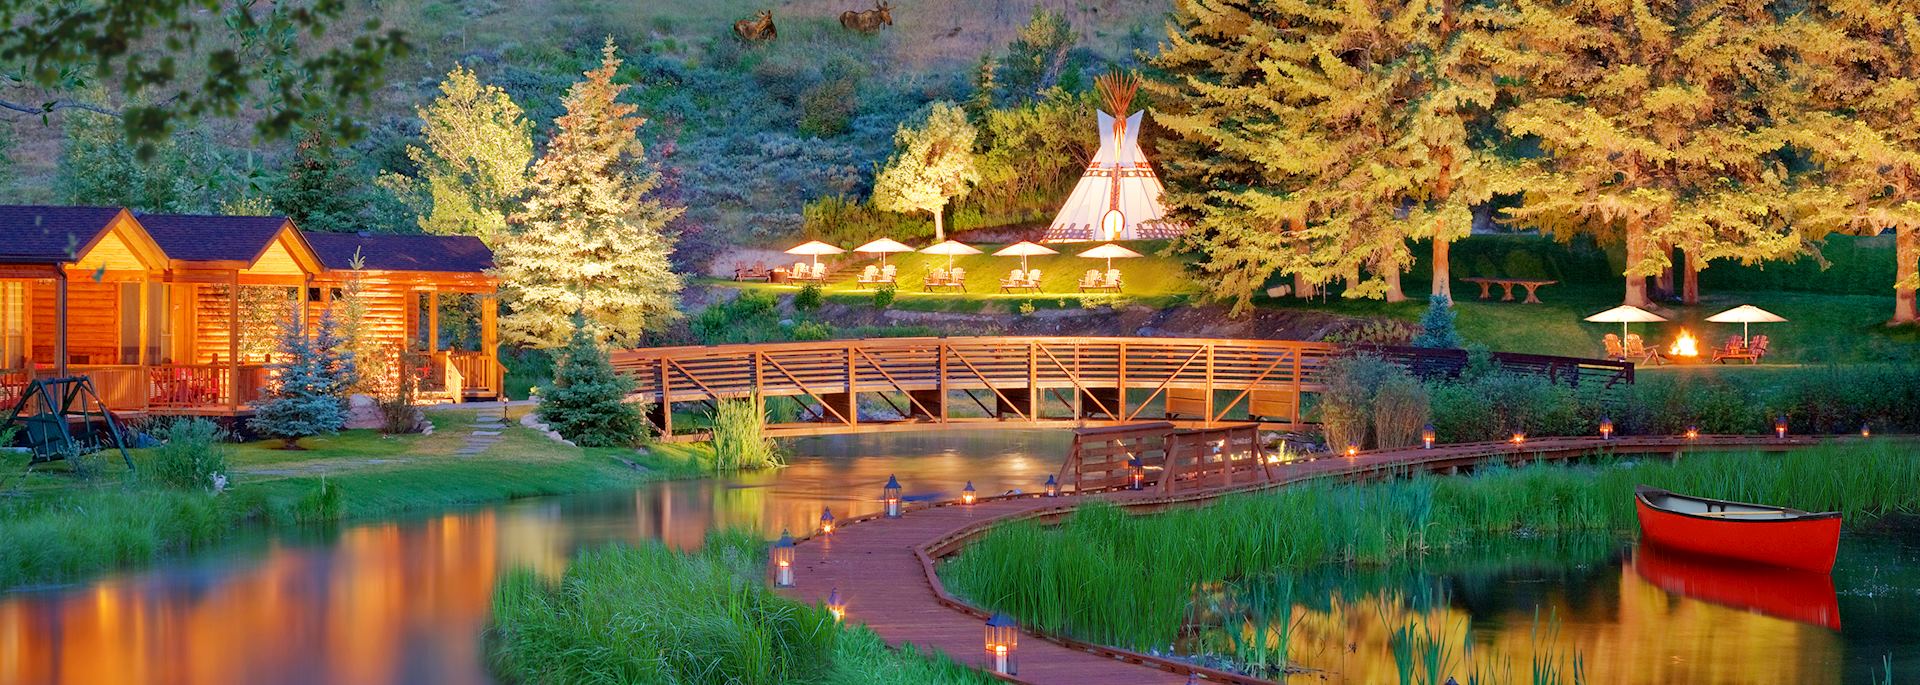 Rustic Inn Creekside Resort & Spa